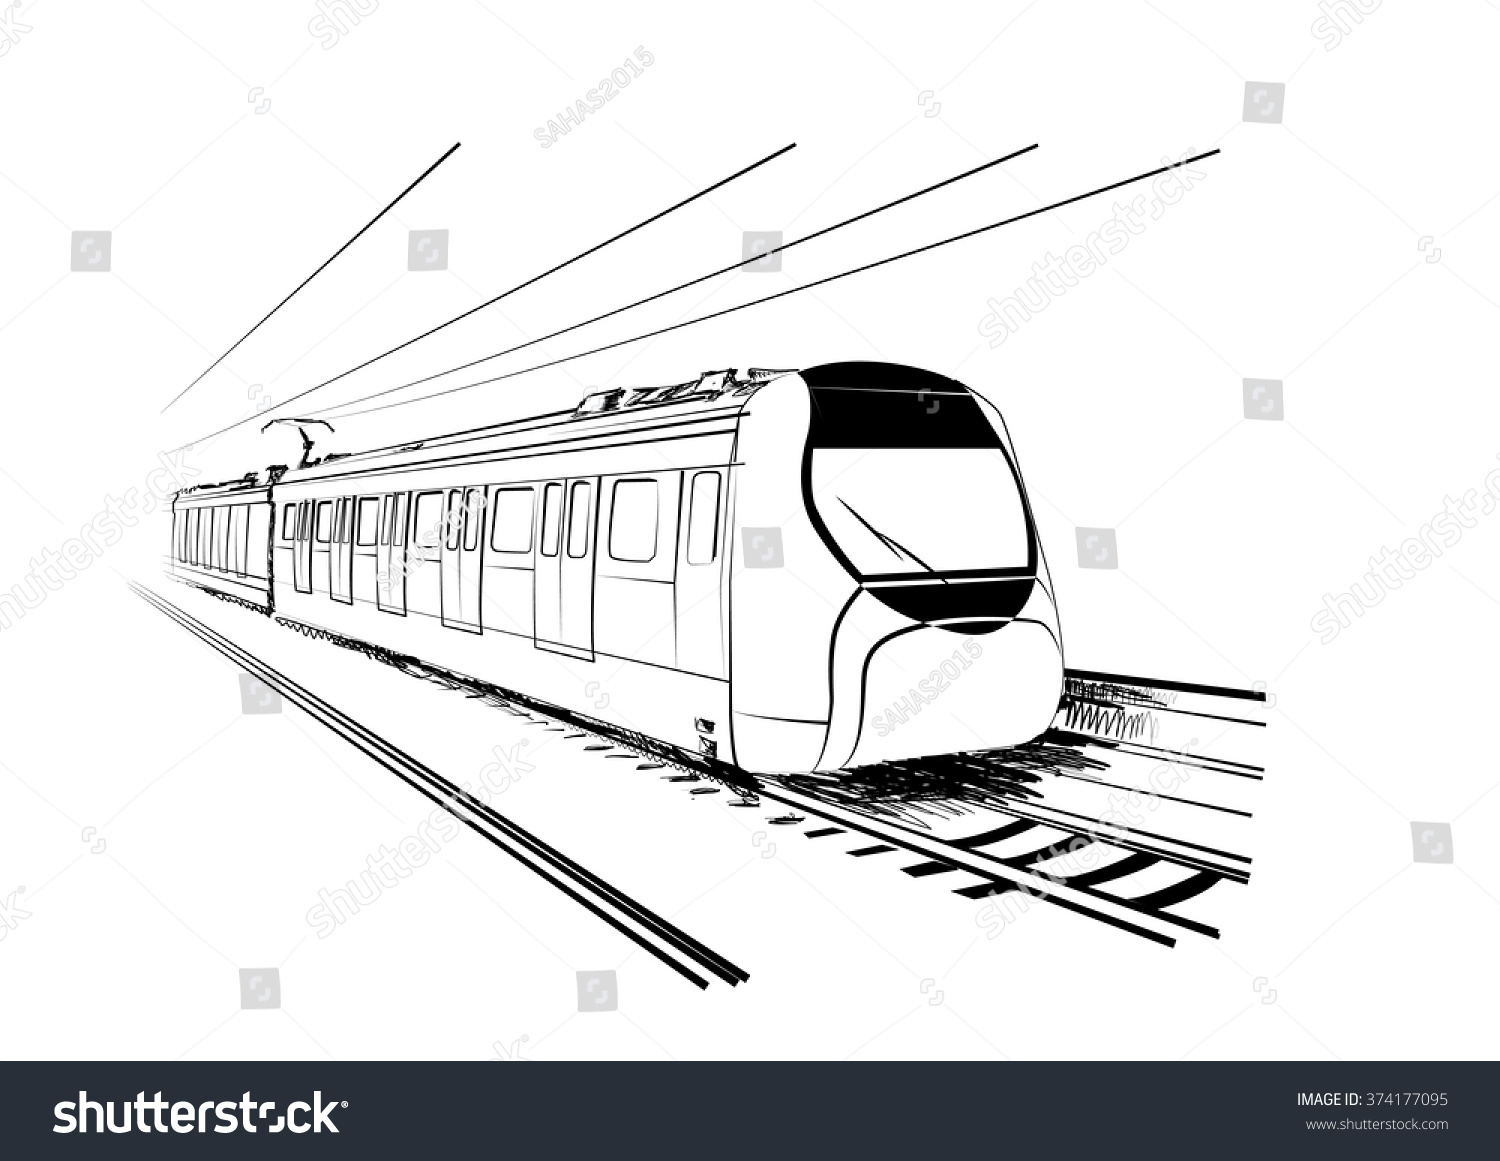 Download Sketch Hong Kong Train Stock Vector 374177095 - Shutterstock